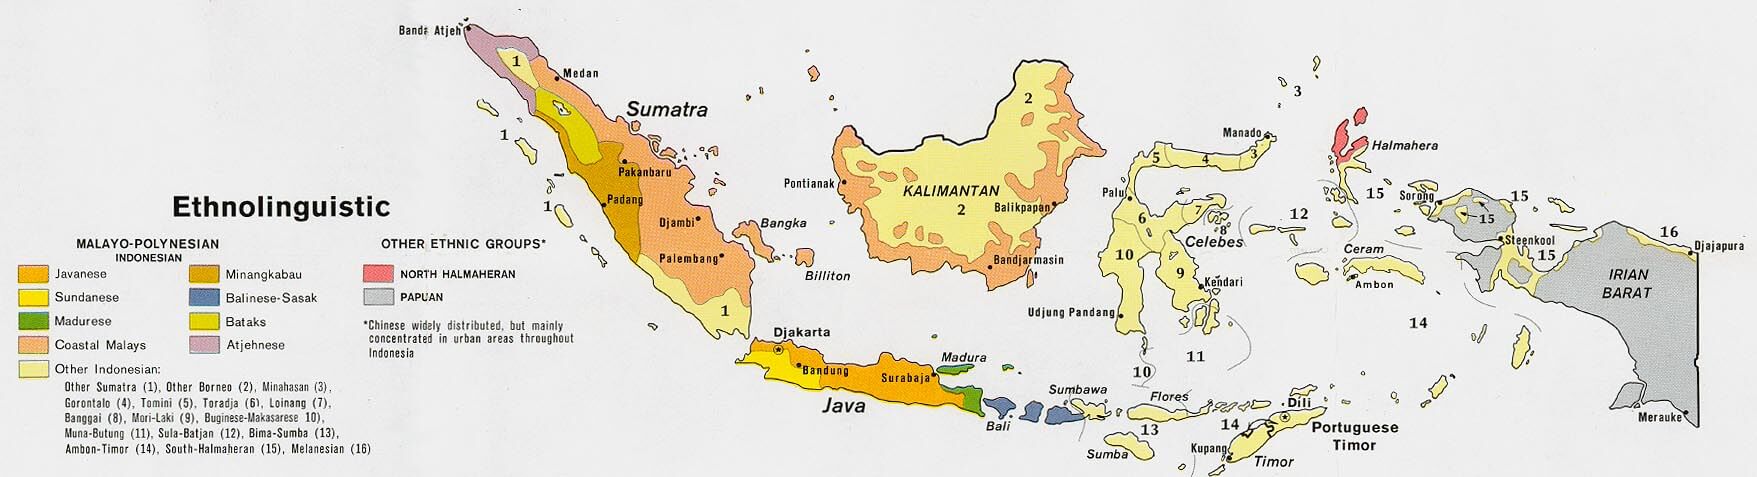 indonesia ethnic groups map